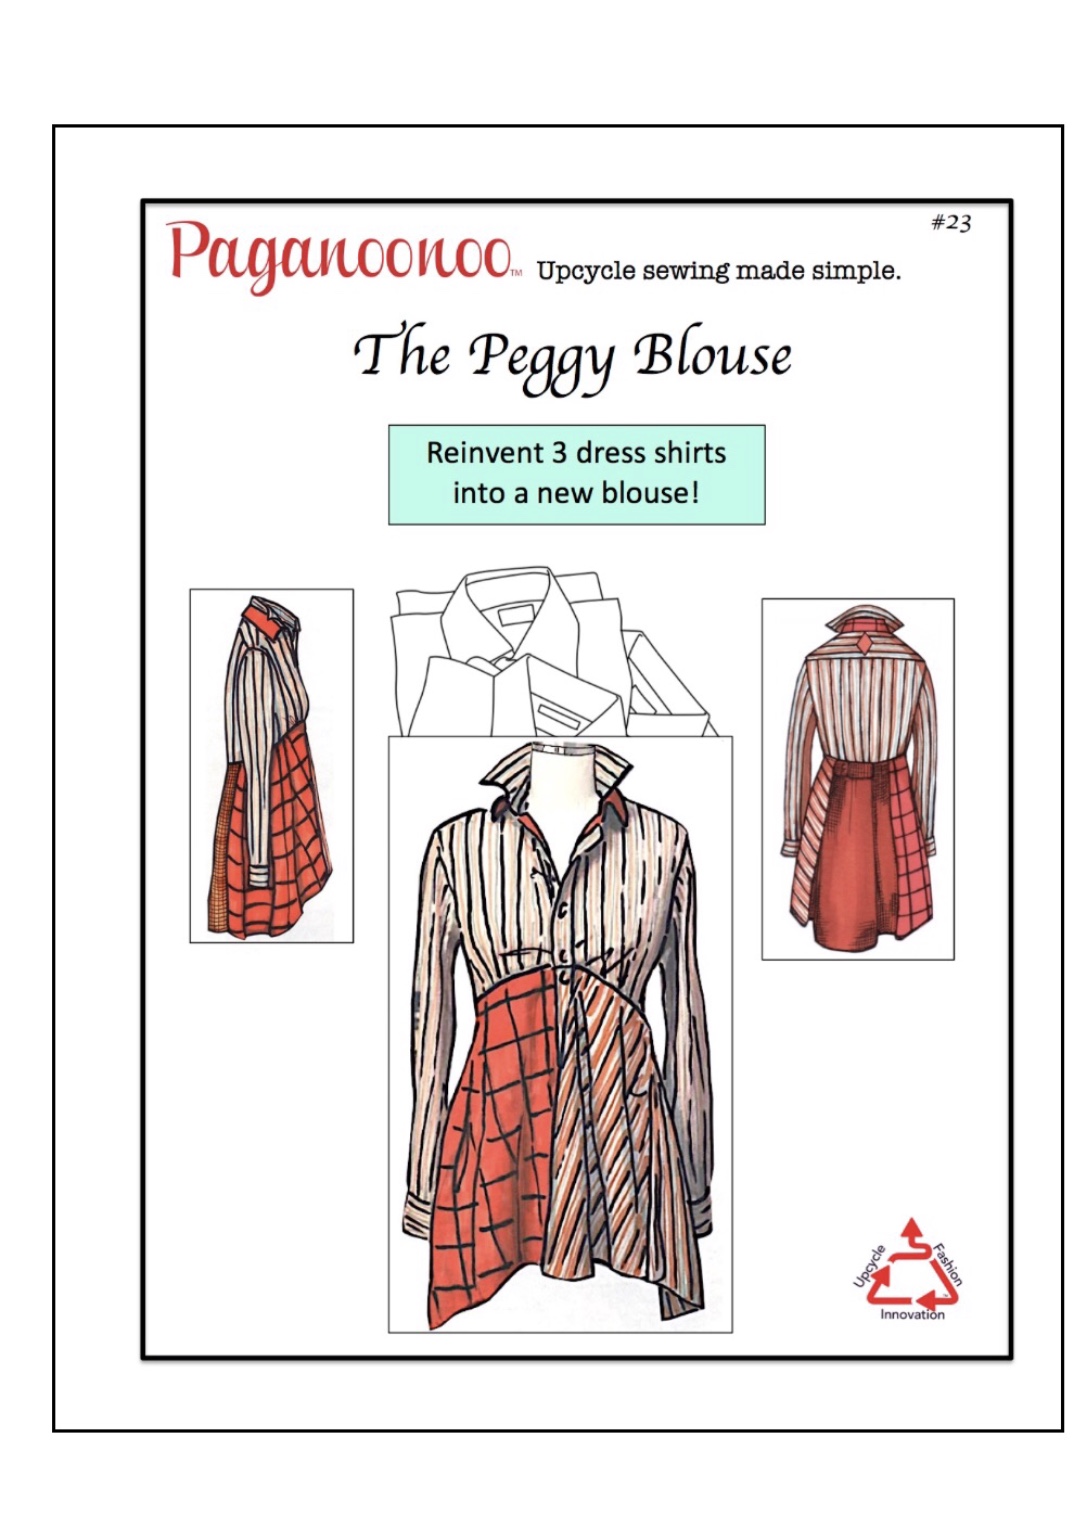 Paganoonoo: An exercise in color choices, Peggy Blouse, Paganoonoo